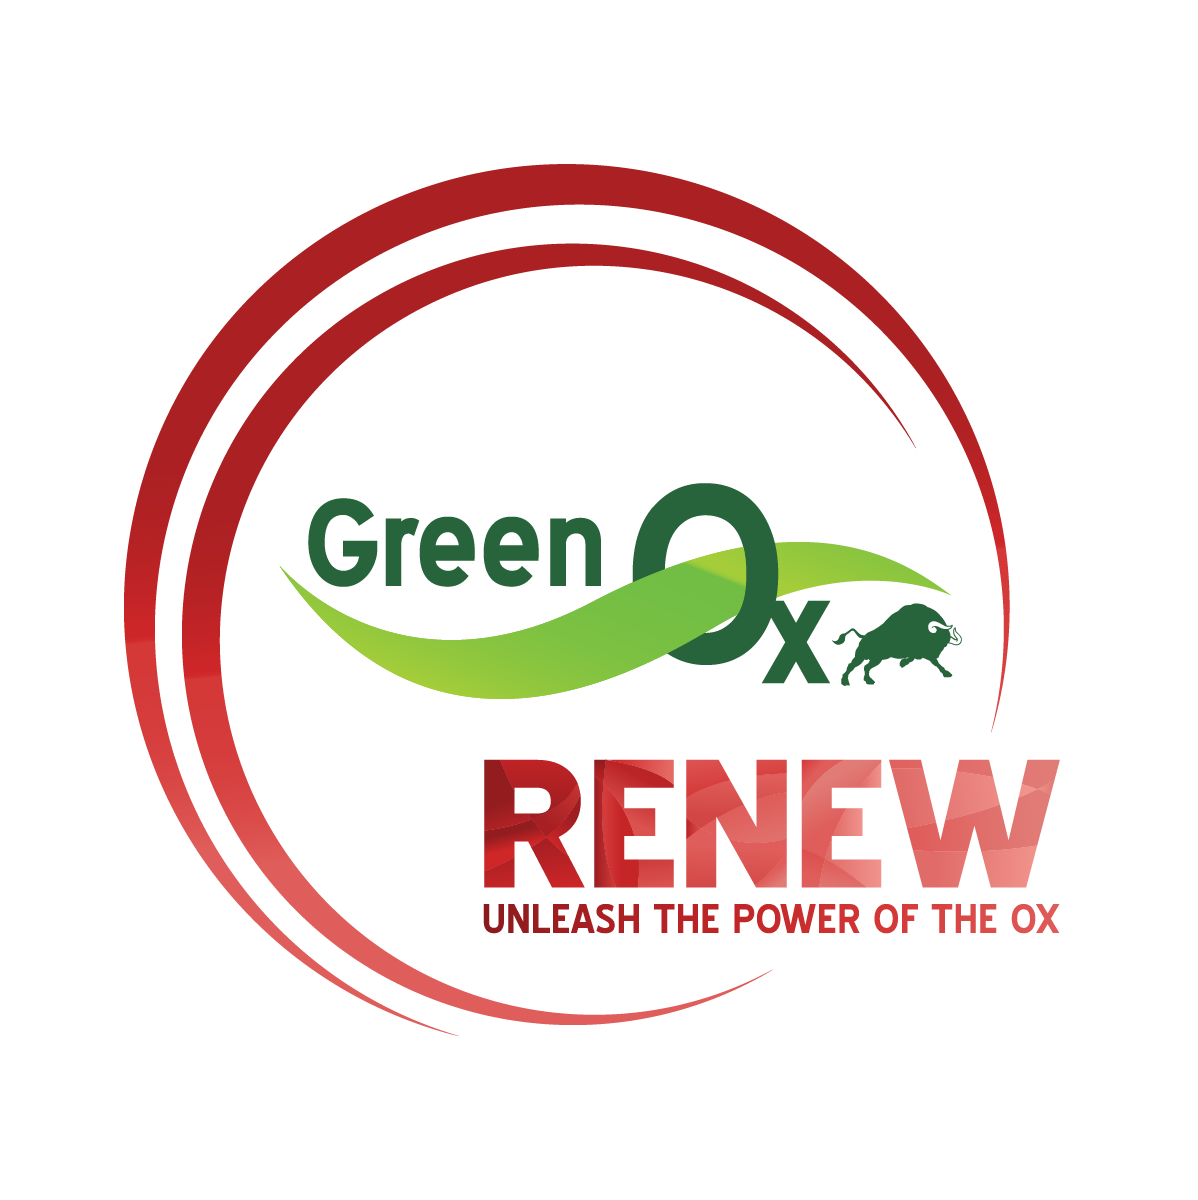 Green ox renew